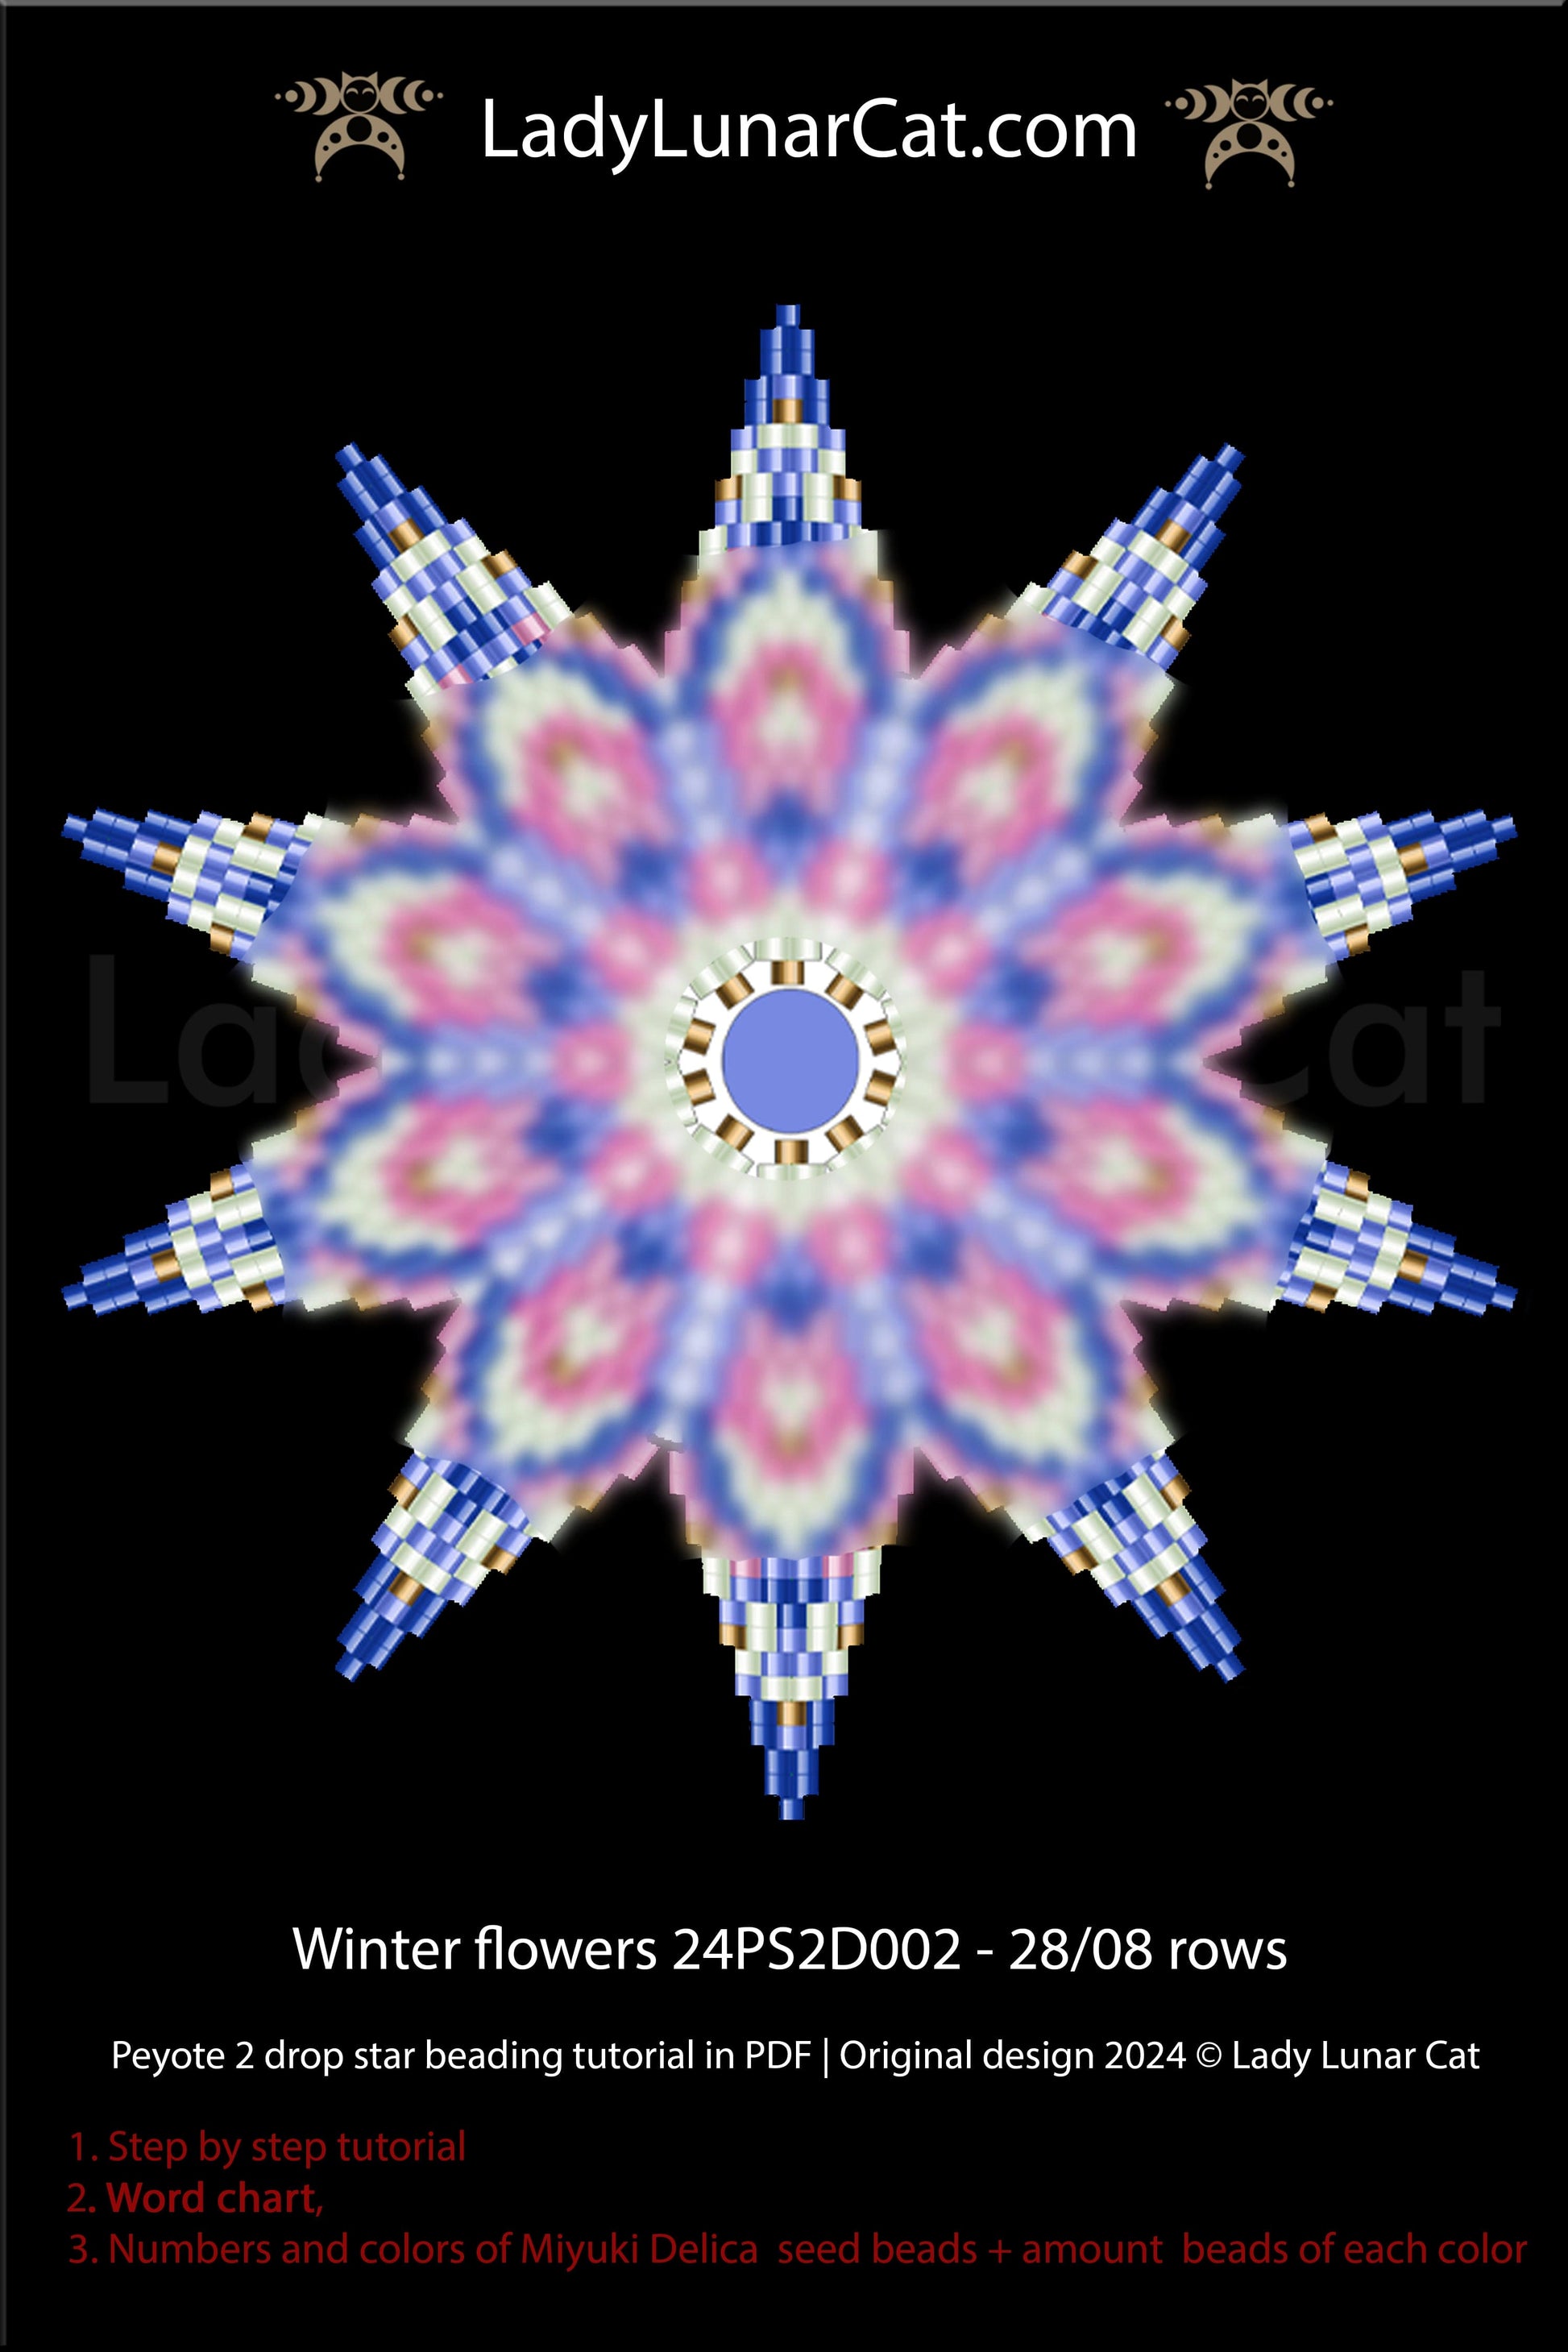 Peyote 2 drop star stepby step tutorial,  Winter flower pattern for beading -  24PS2D002 8 rows LadyLunarCat